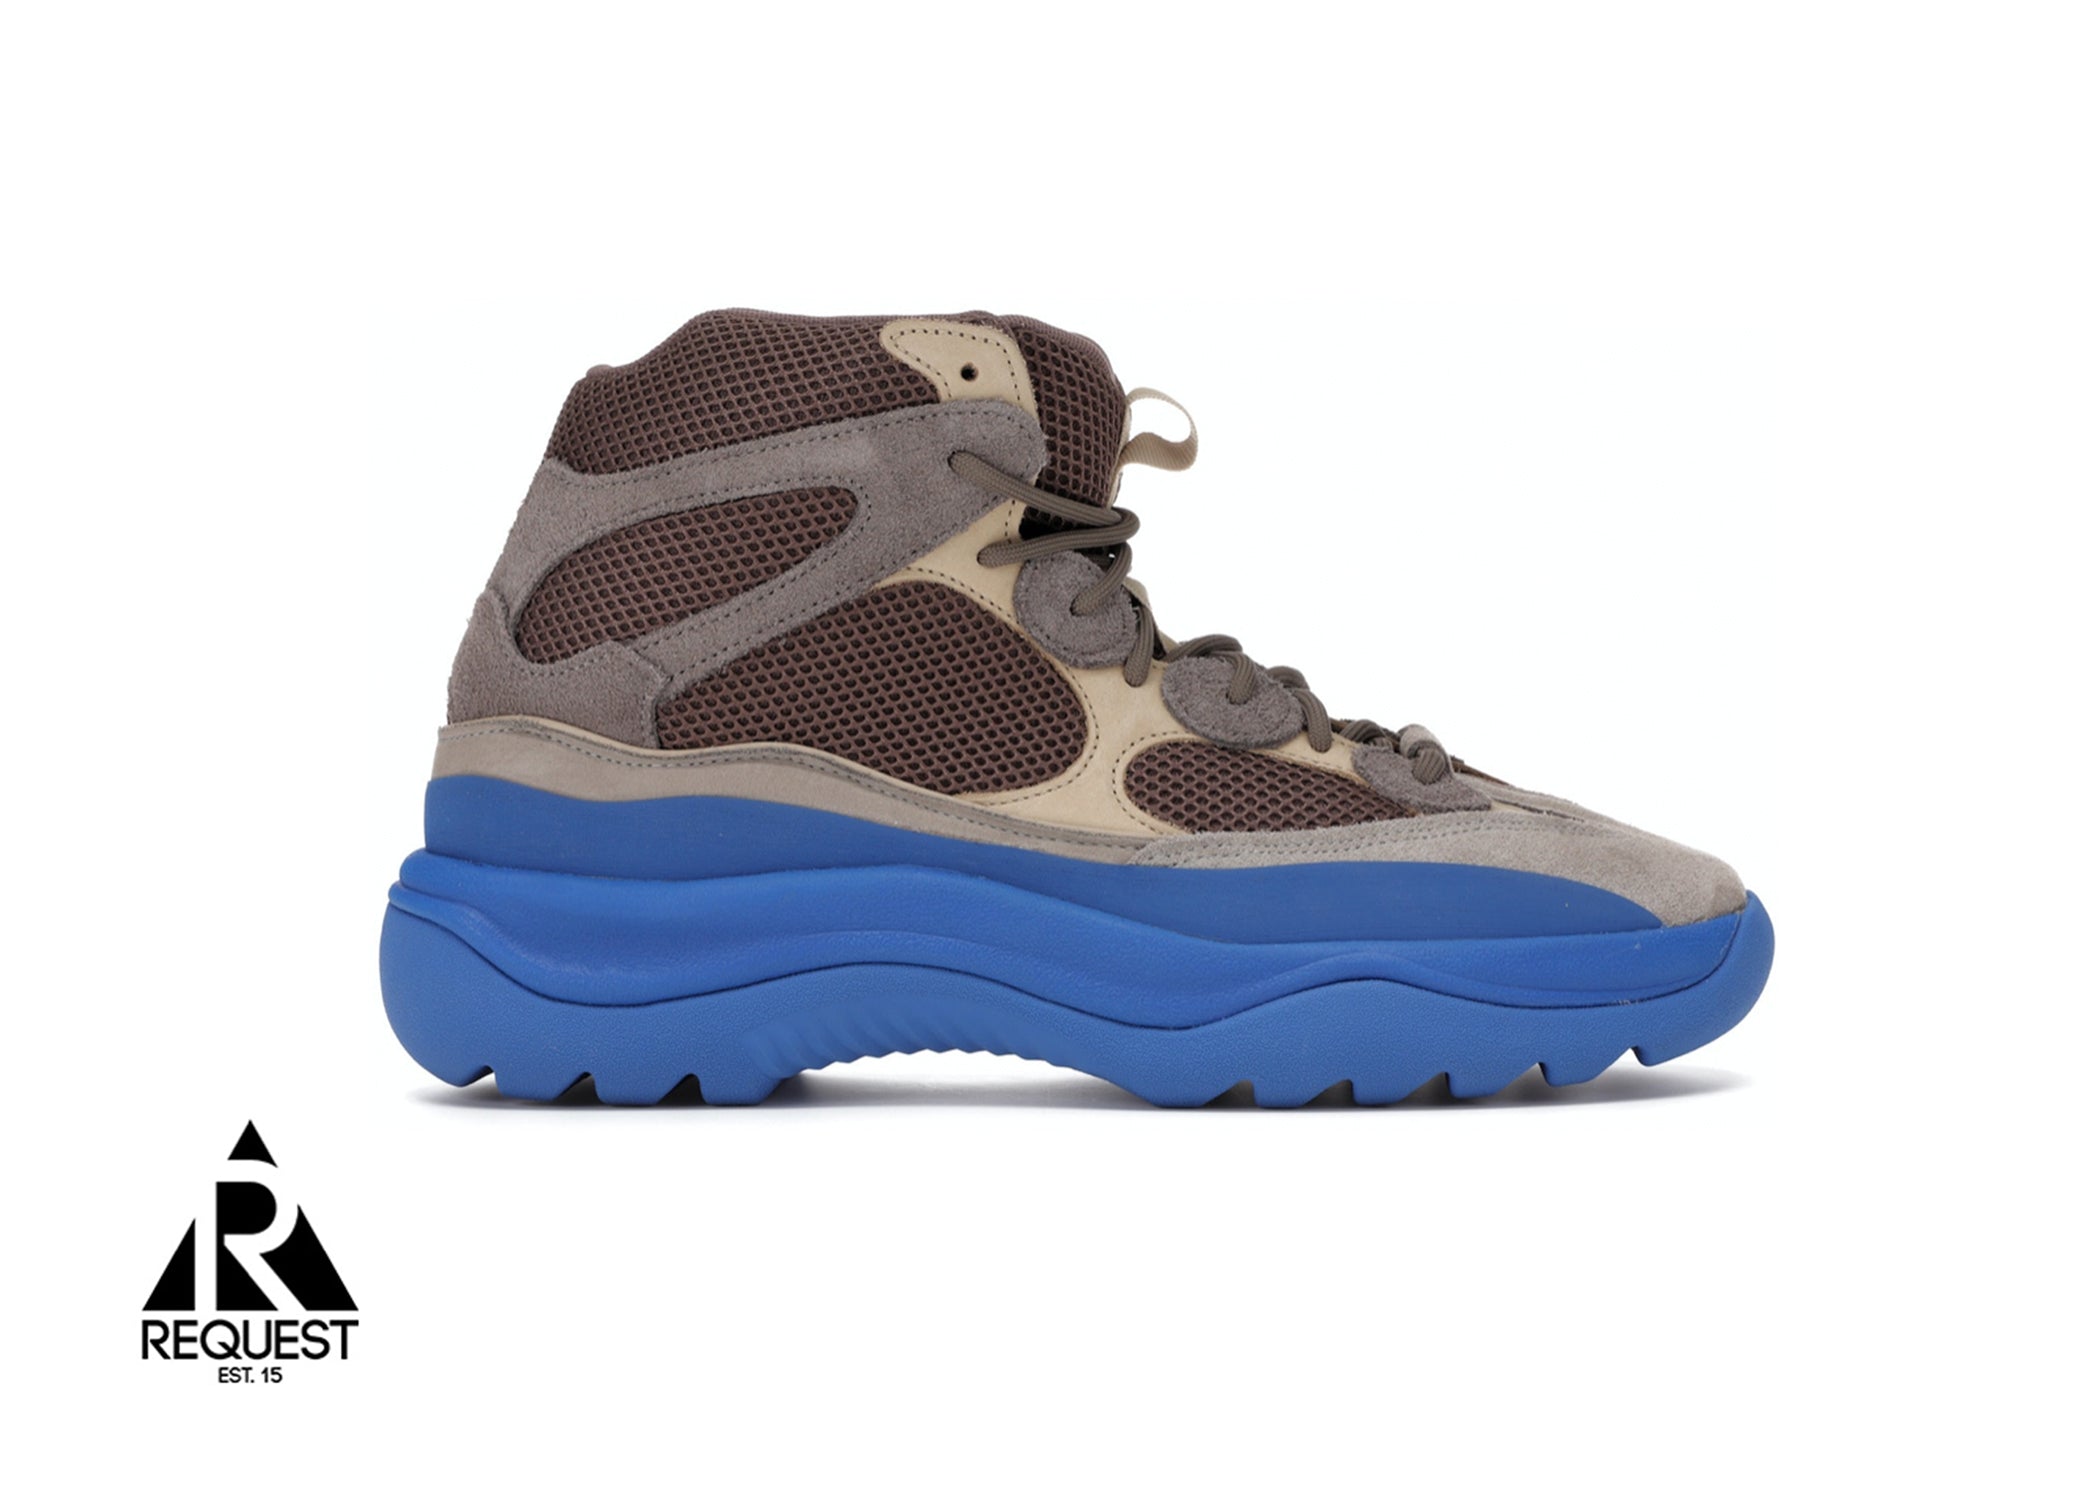 Adidas Yeezy Desert Boot “Taupe Blue”